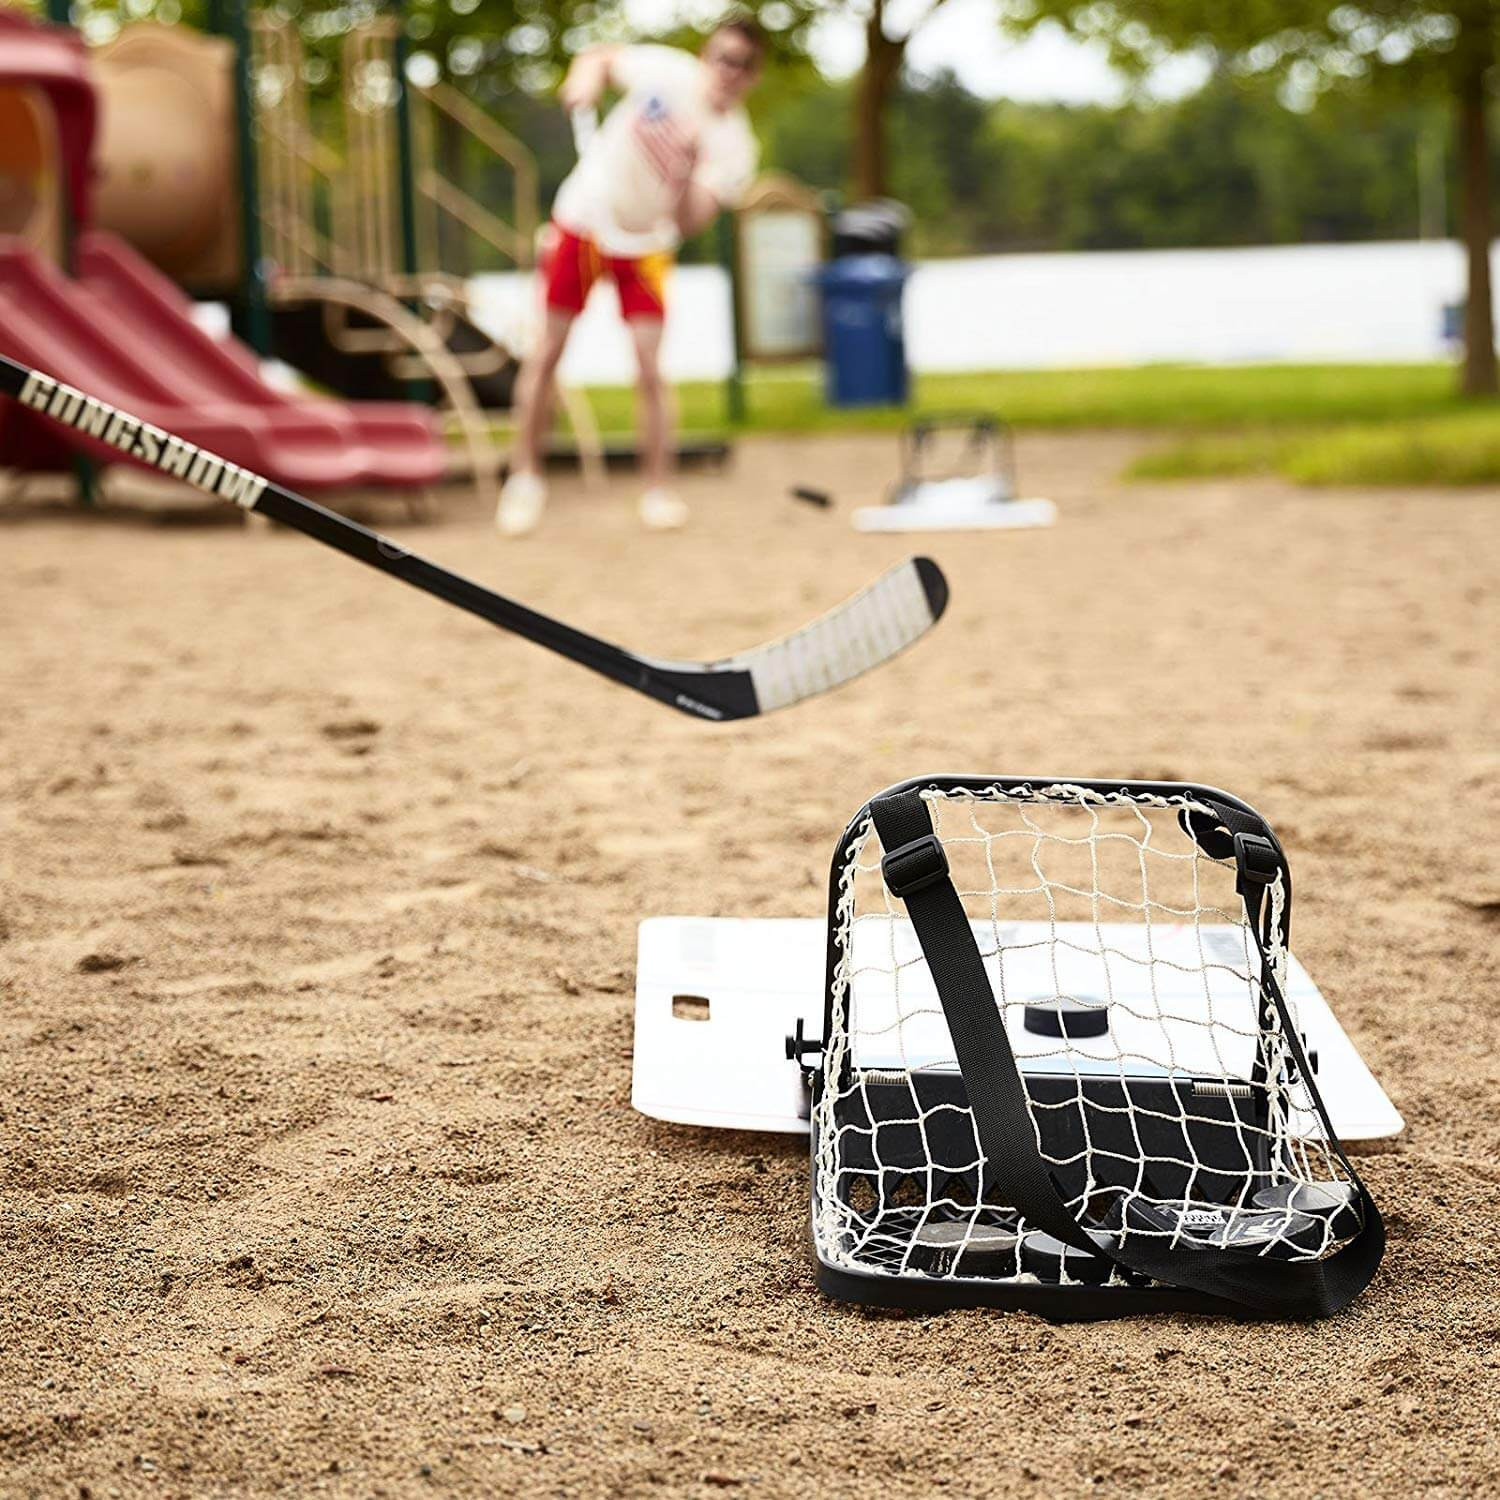 Backyard Hockey Game
 Top 50 Hockey Gifts for Kids [2020 Hockey Gift Guide]